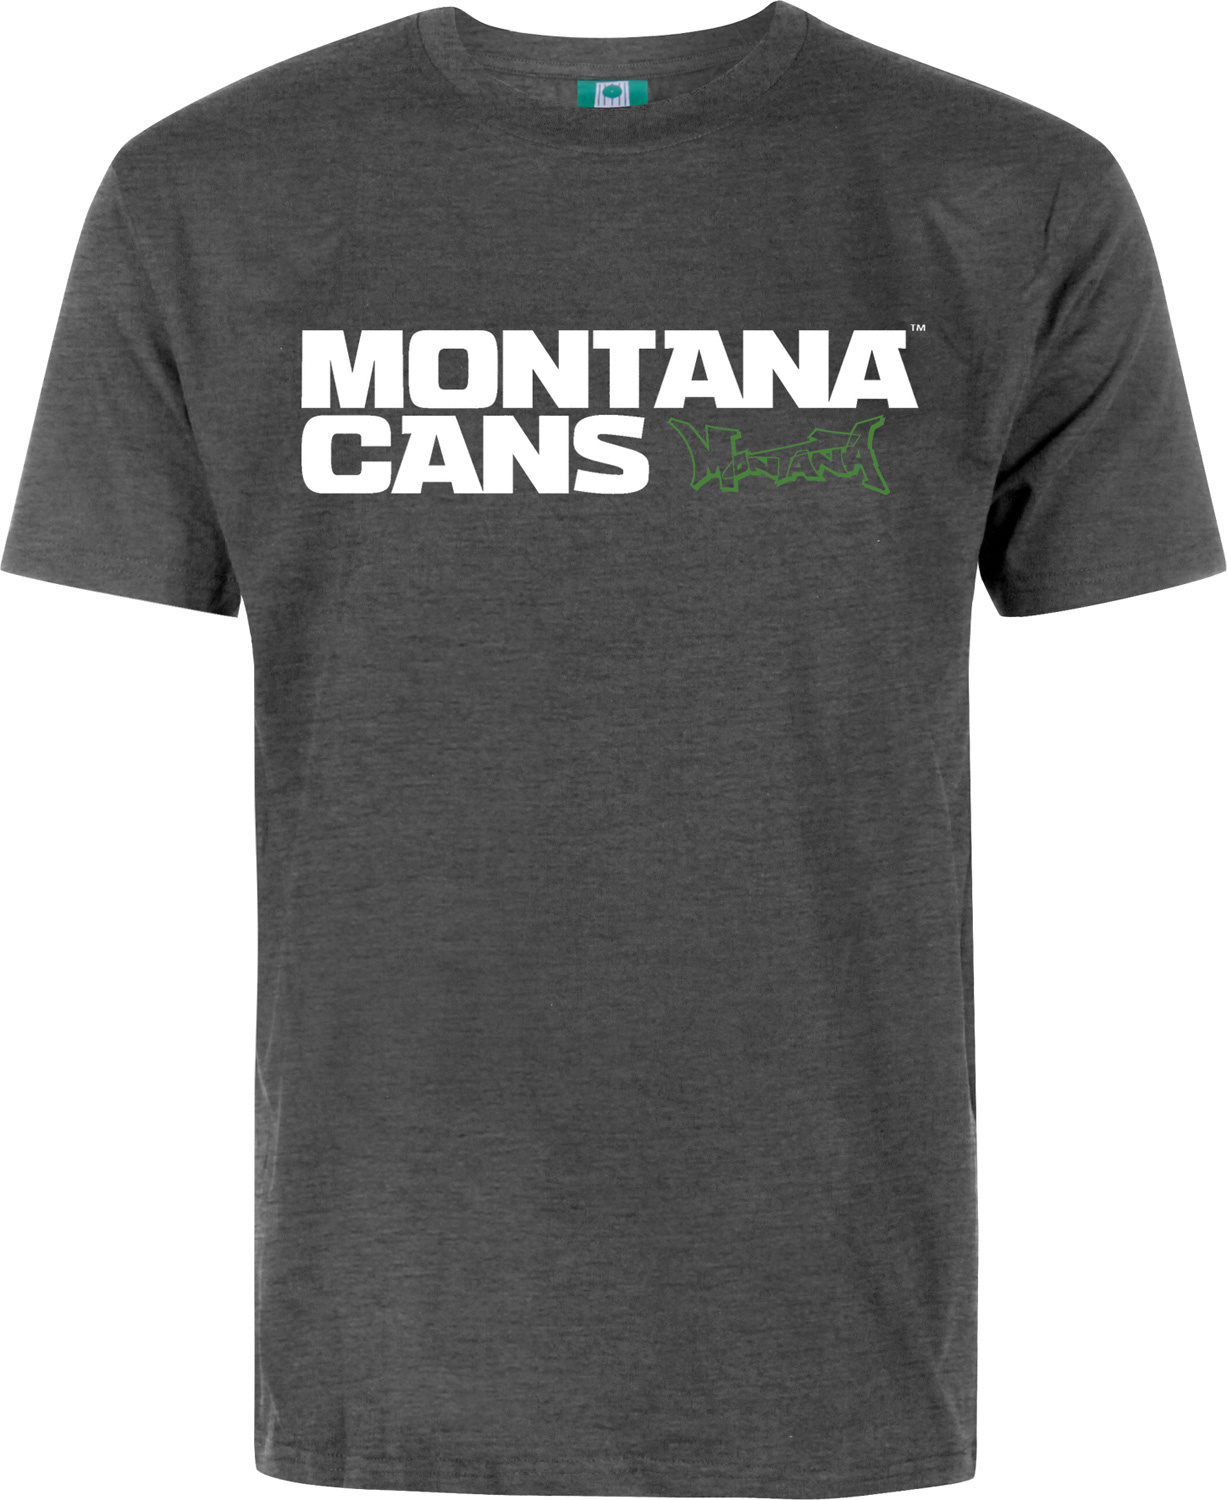 Montana cans. Футболка Montana. Футболки Монтана cans. Футболка Монтана мужская. Футболка с логотипом Монтана.